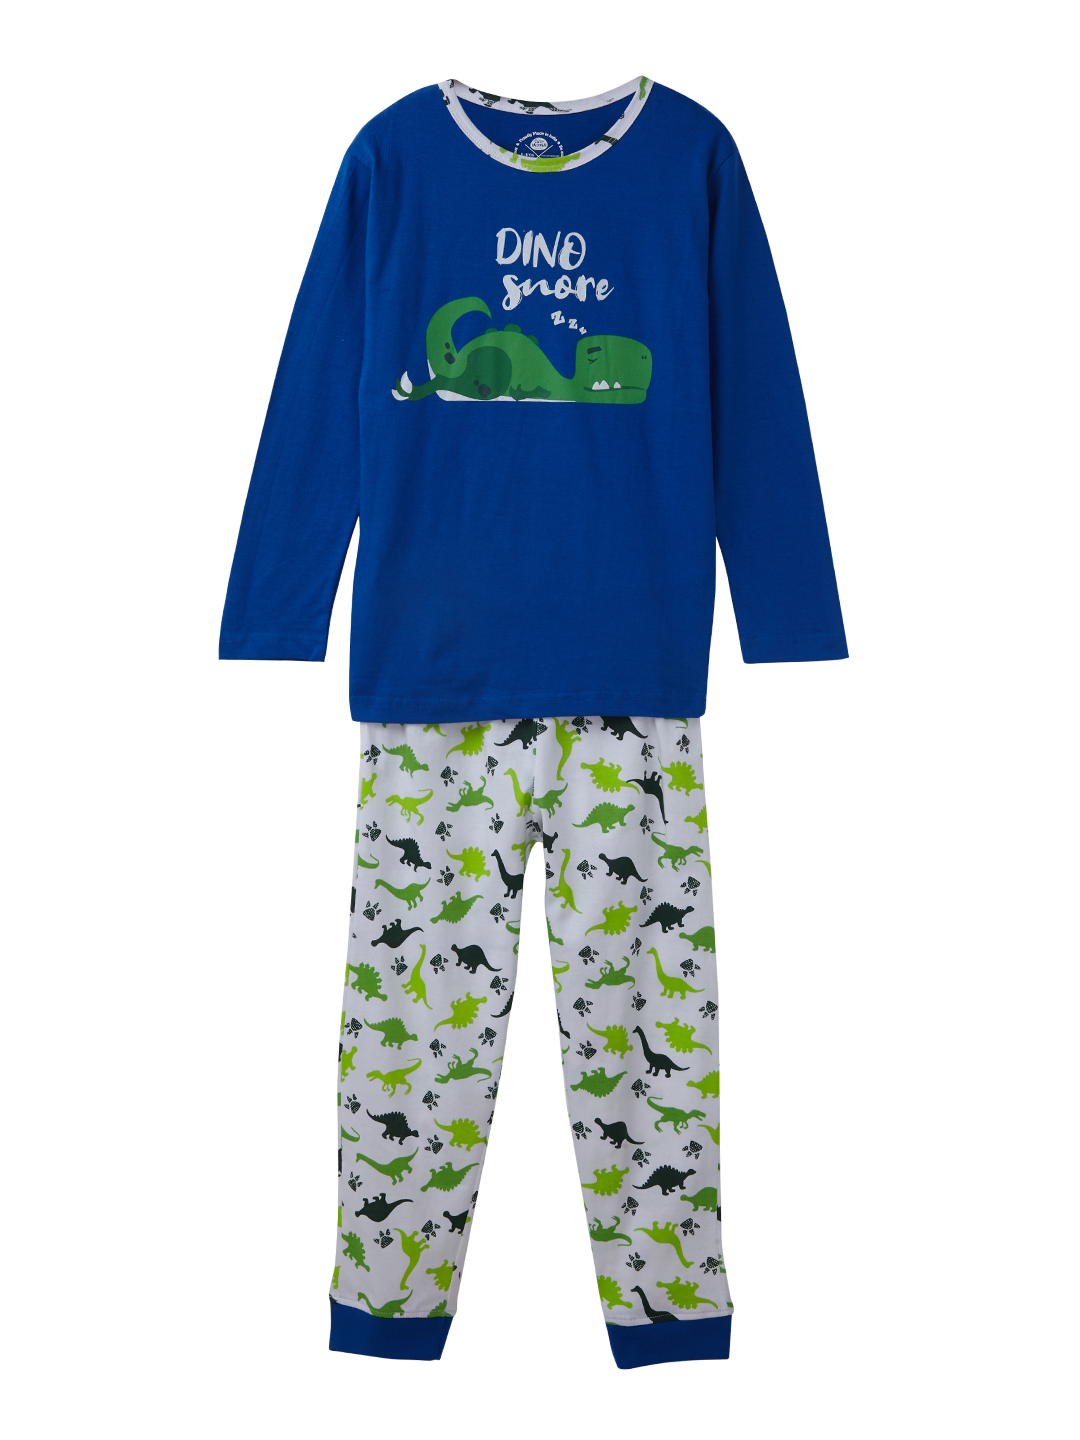 Boys Sleepwear Set - Blue full sleeve tee with Dino-snore print all over Pajama (EOSS)